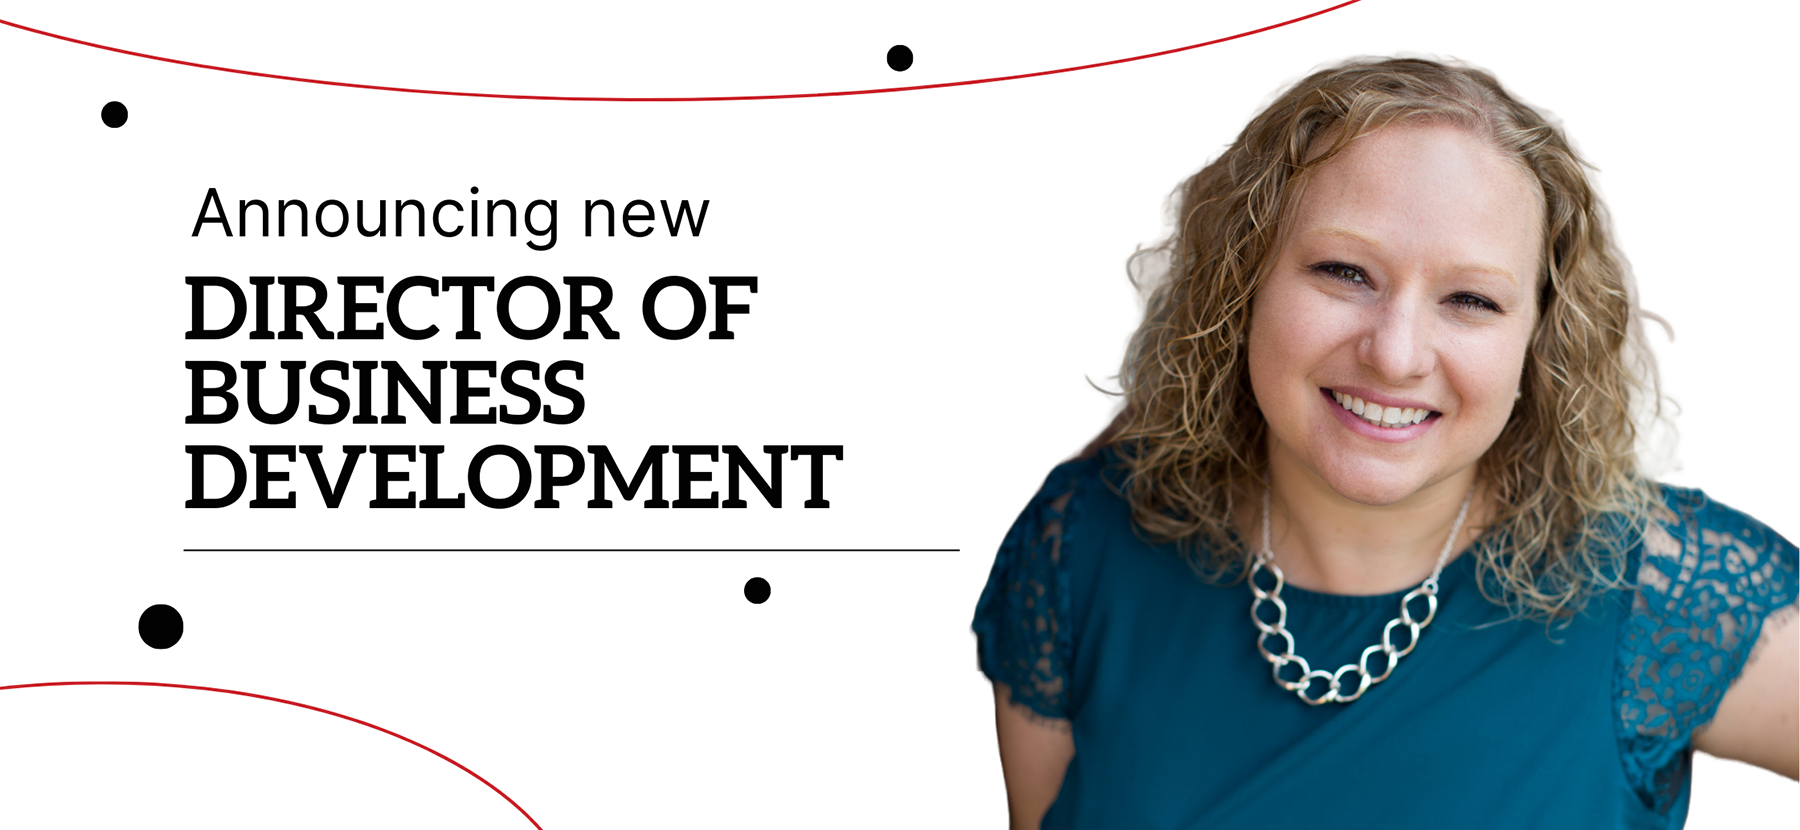 Announcing New Director of Business Development: Kristin Studabaker